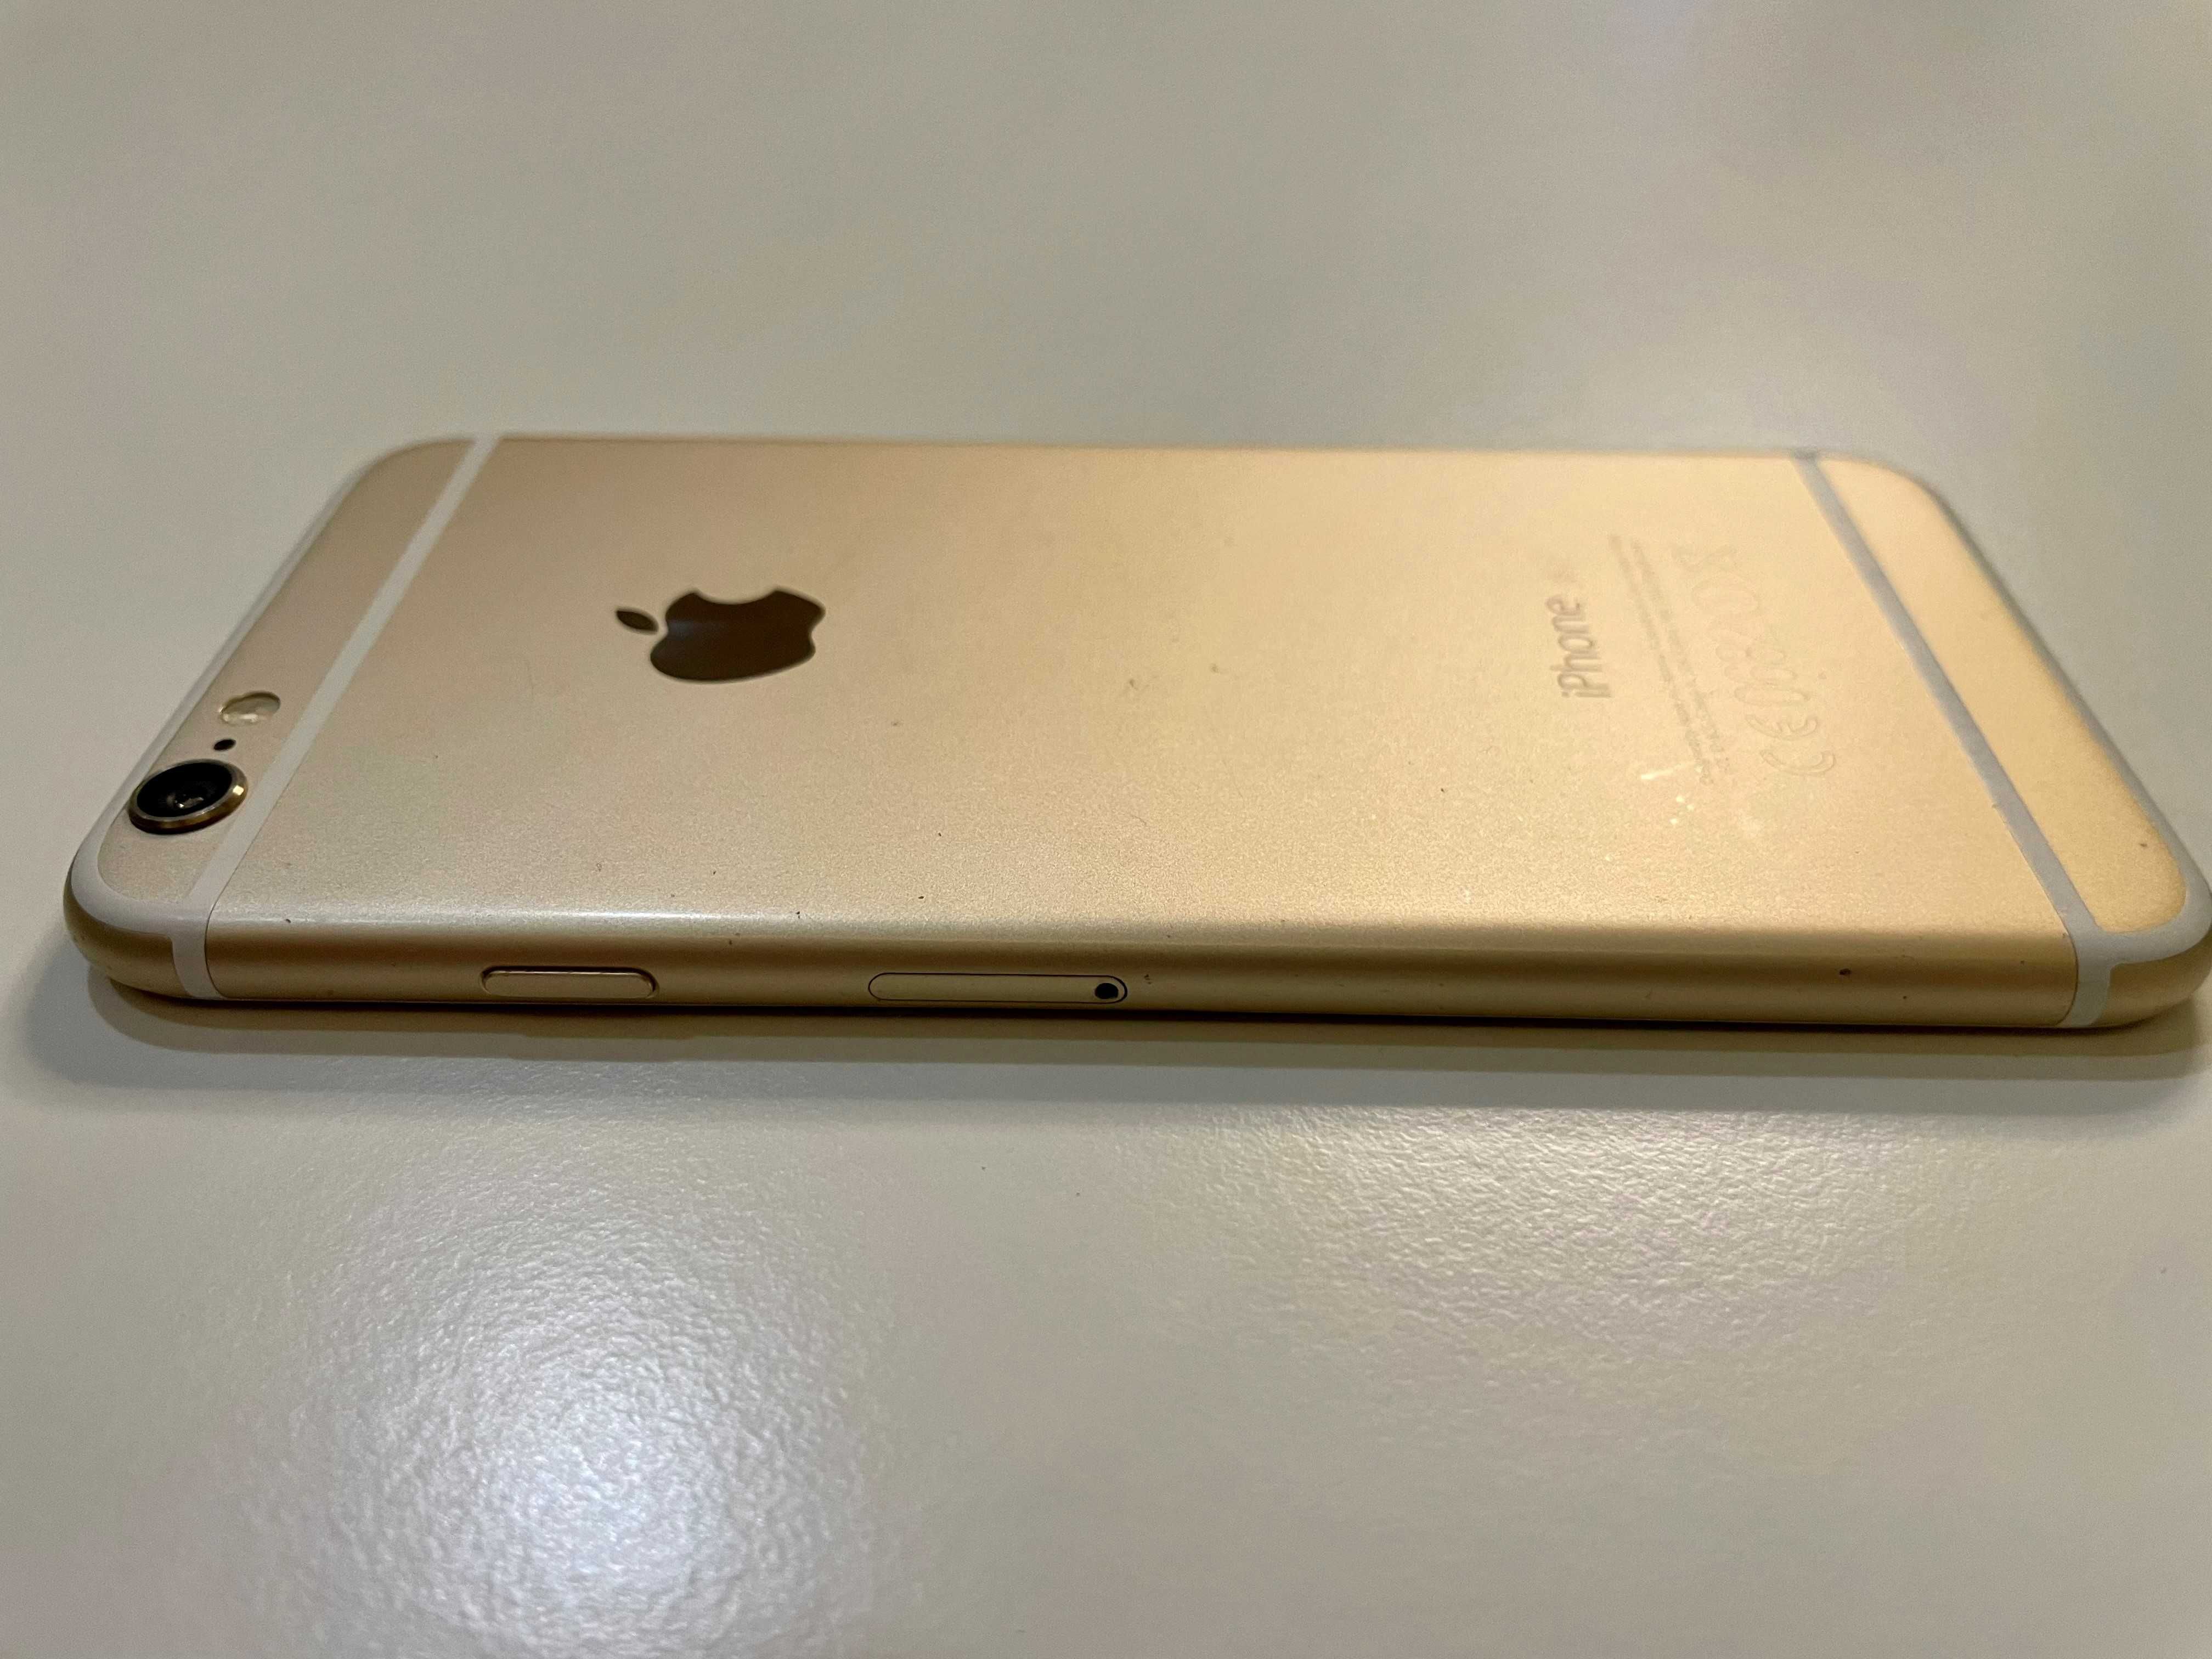 Apple iPhone 6, 16GB, rose gold